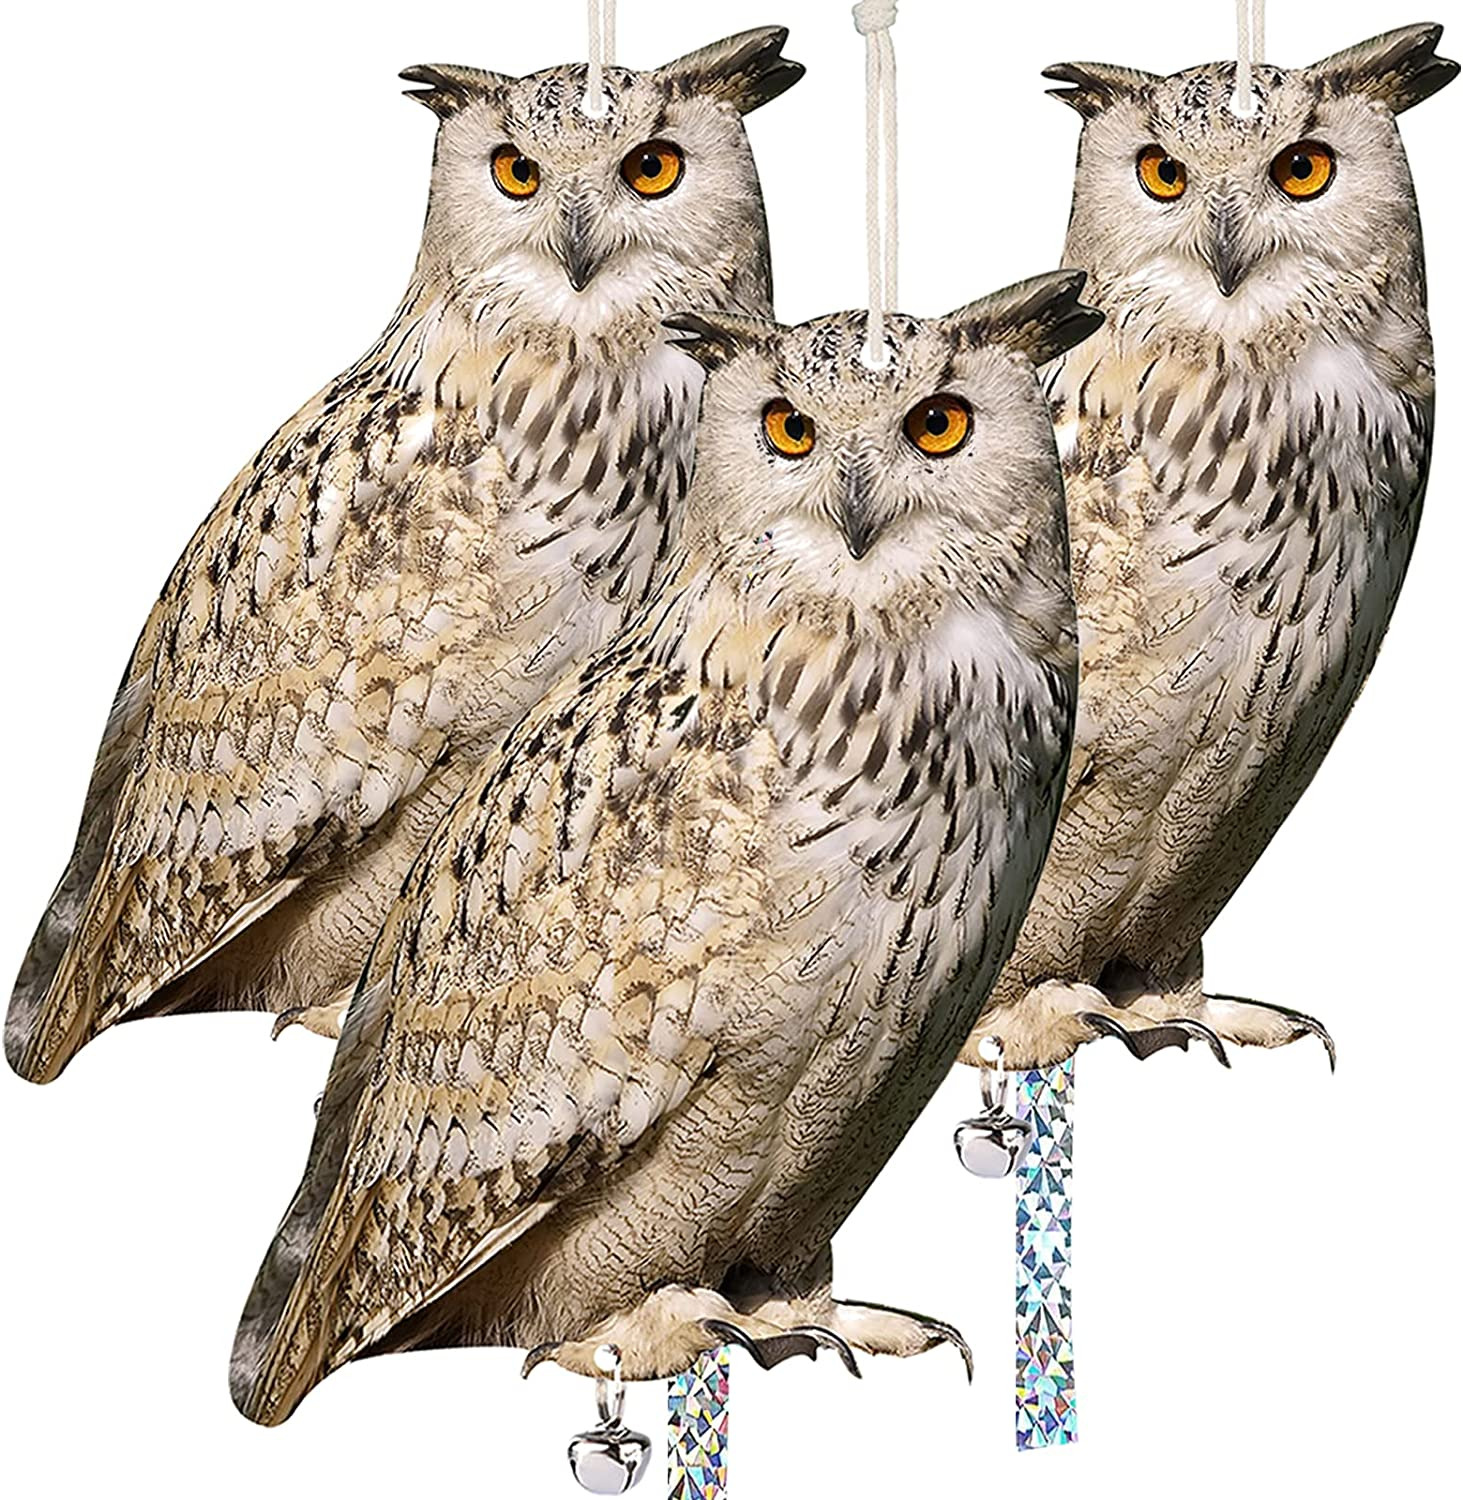 Fake Owl Reflective Hanging Bird Decoration Effective Bird Control Device 3 Pack